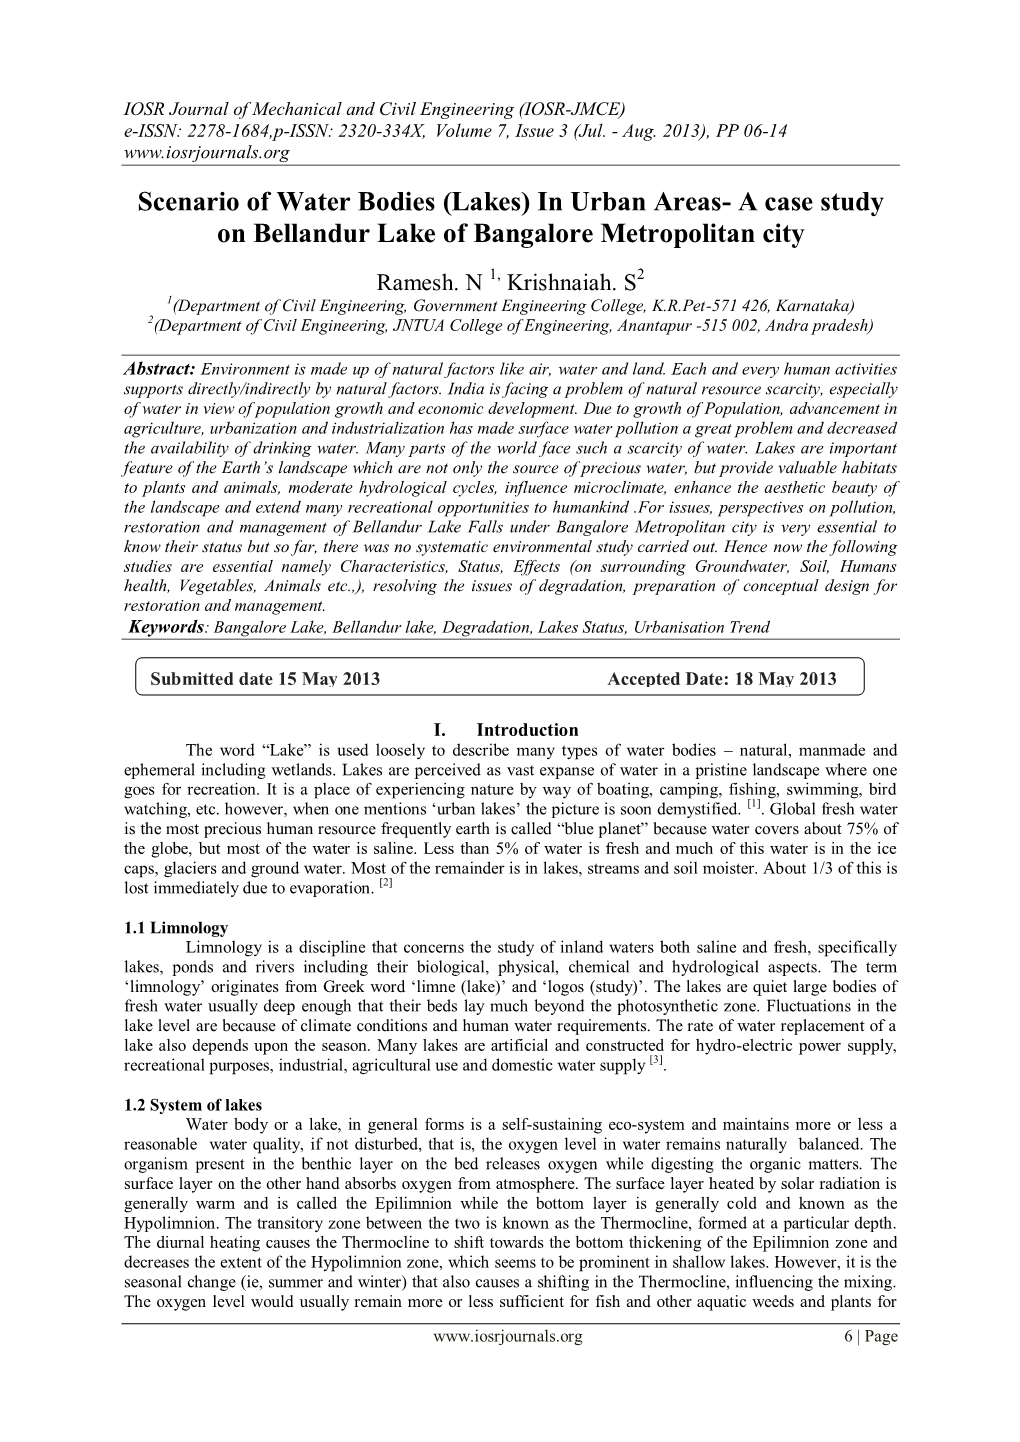 (Lakes) in Urban Areas- a Case Study on Bellandur Lake of Bangalore Metropolitan City